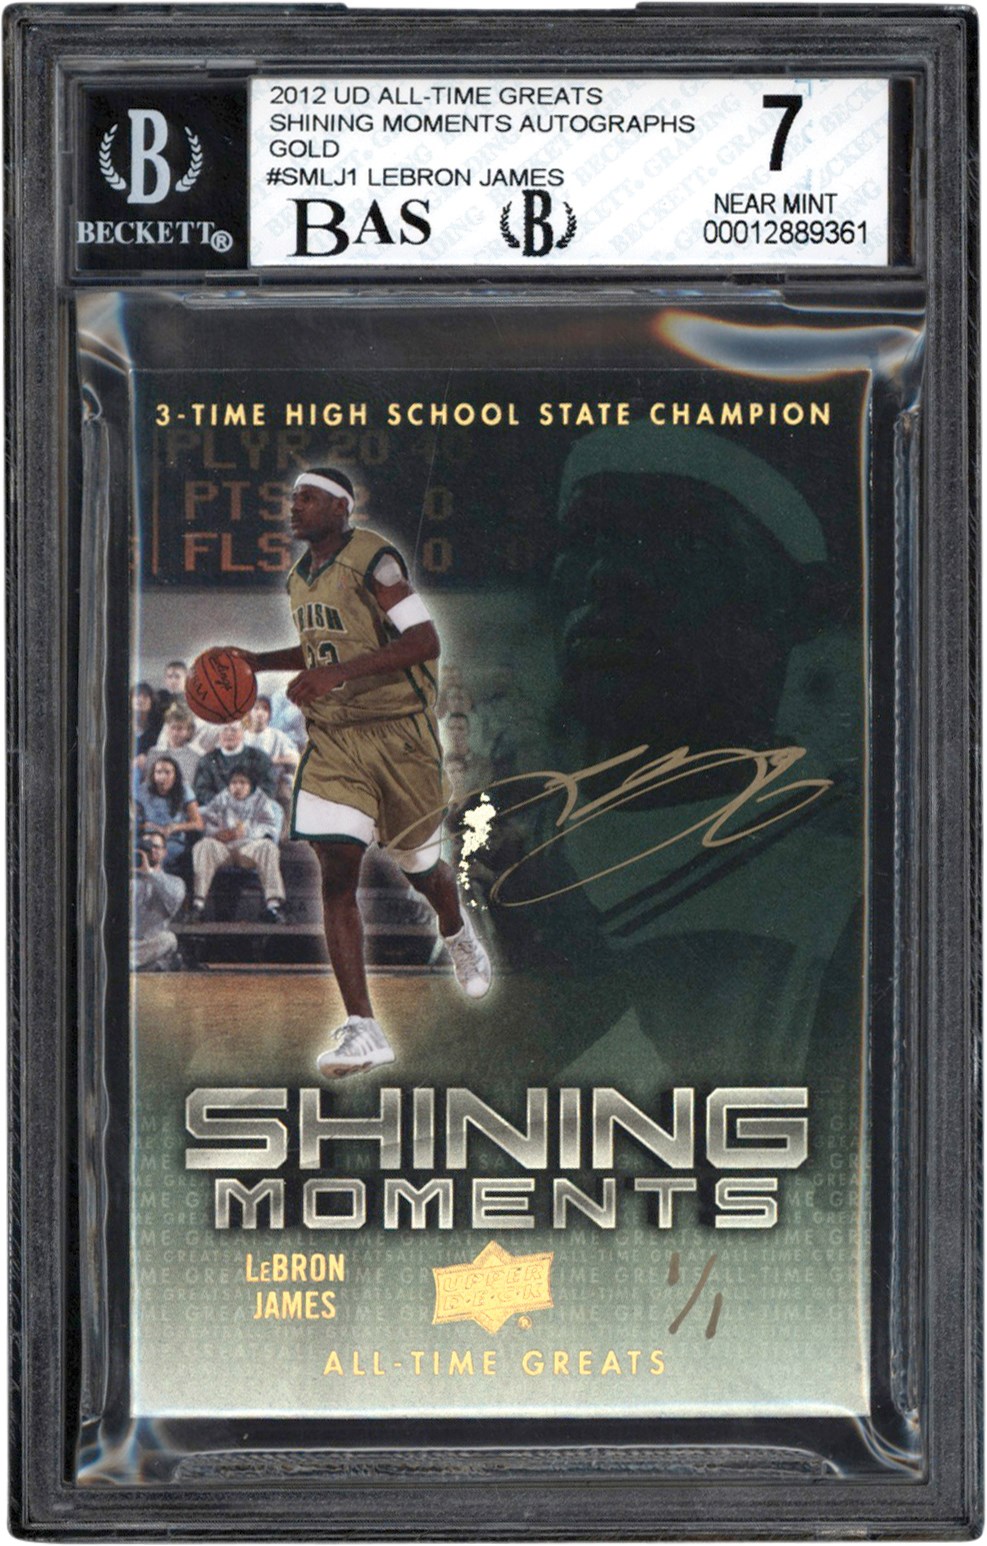 - 2012 UD All-Time Greats Basketball Shining Moments Autographs Gold #SMLJ1 LeBron James Autograph #1/1 BAS NM 7 Auto 8